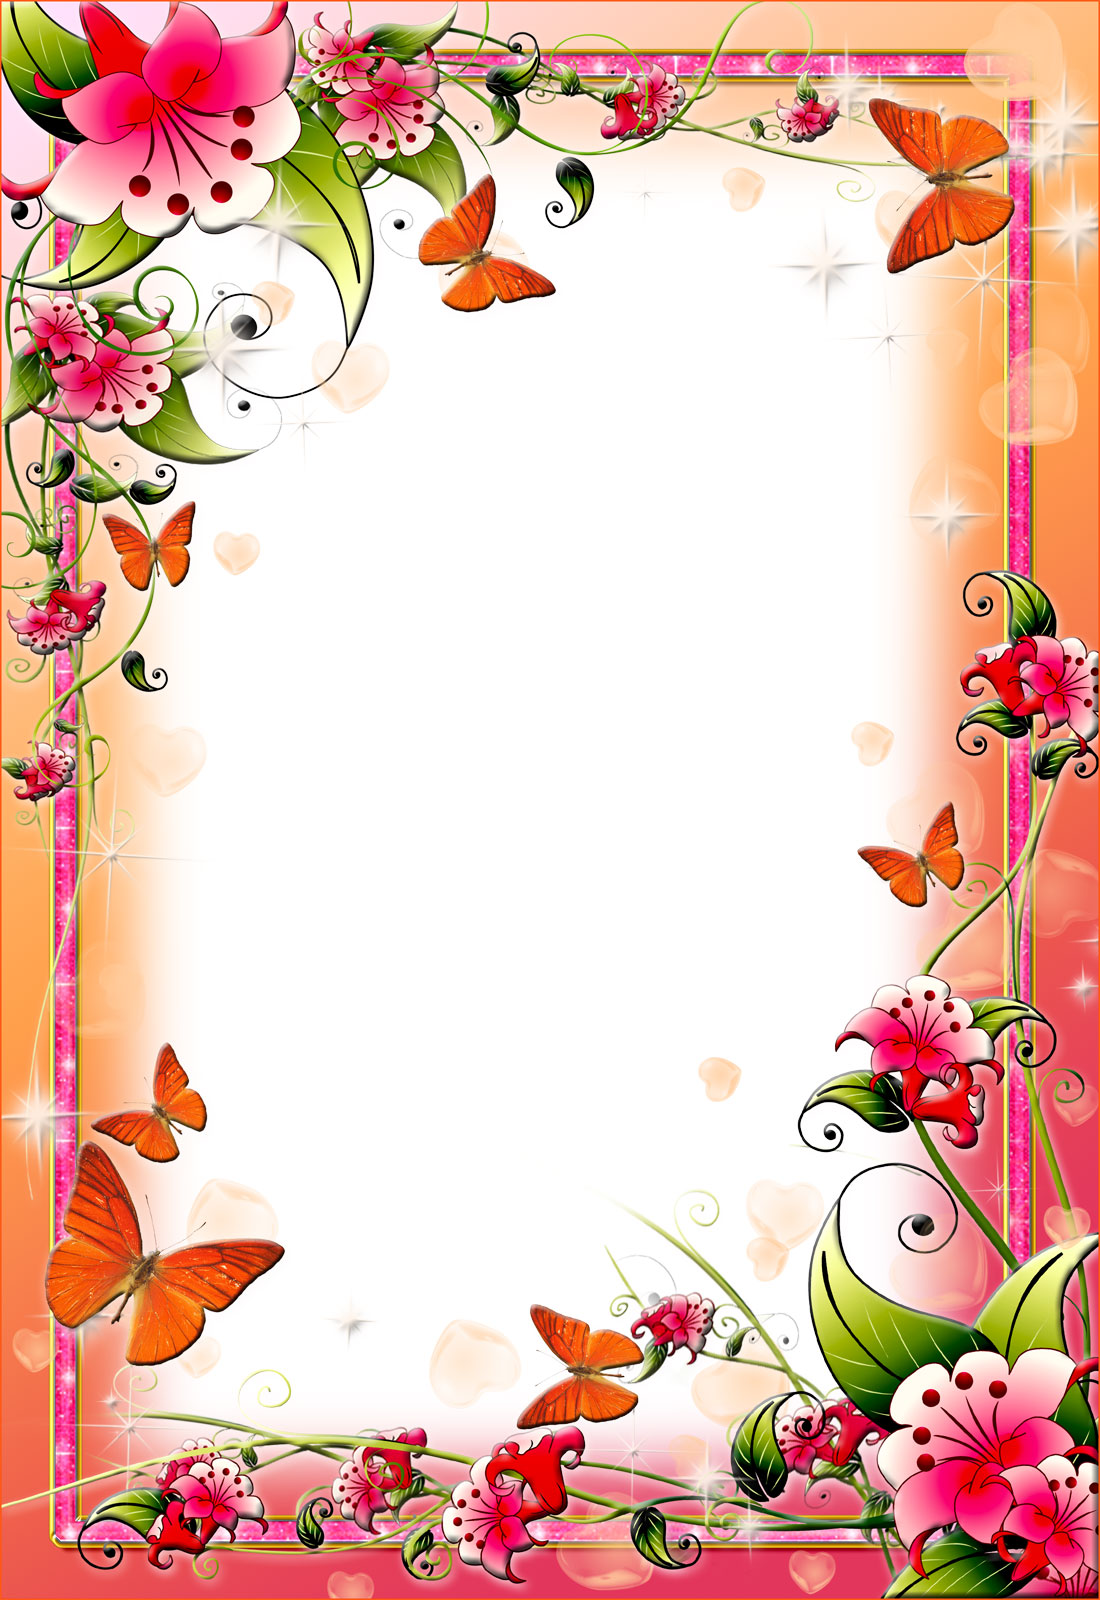 clipart image floral border design - photo #44